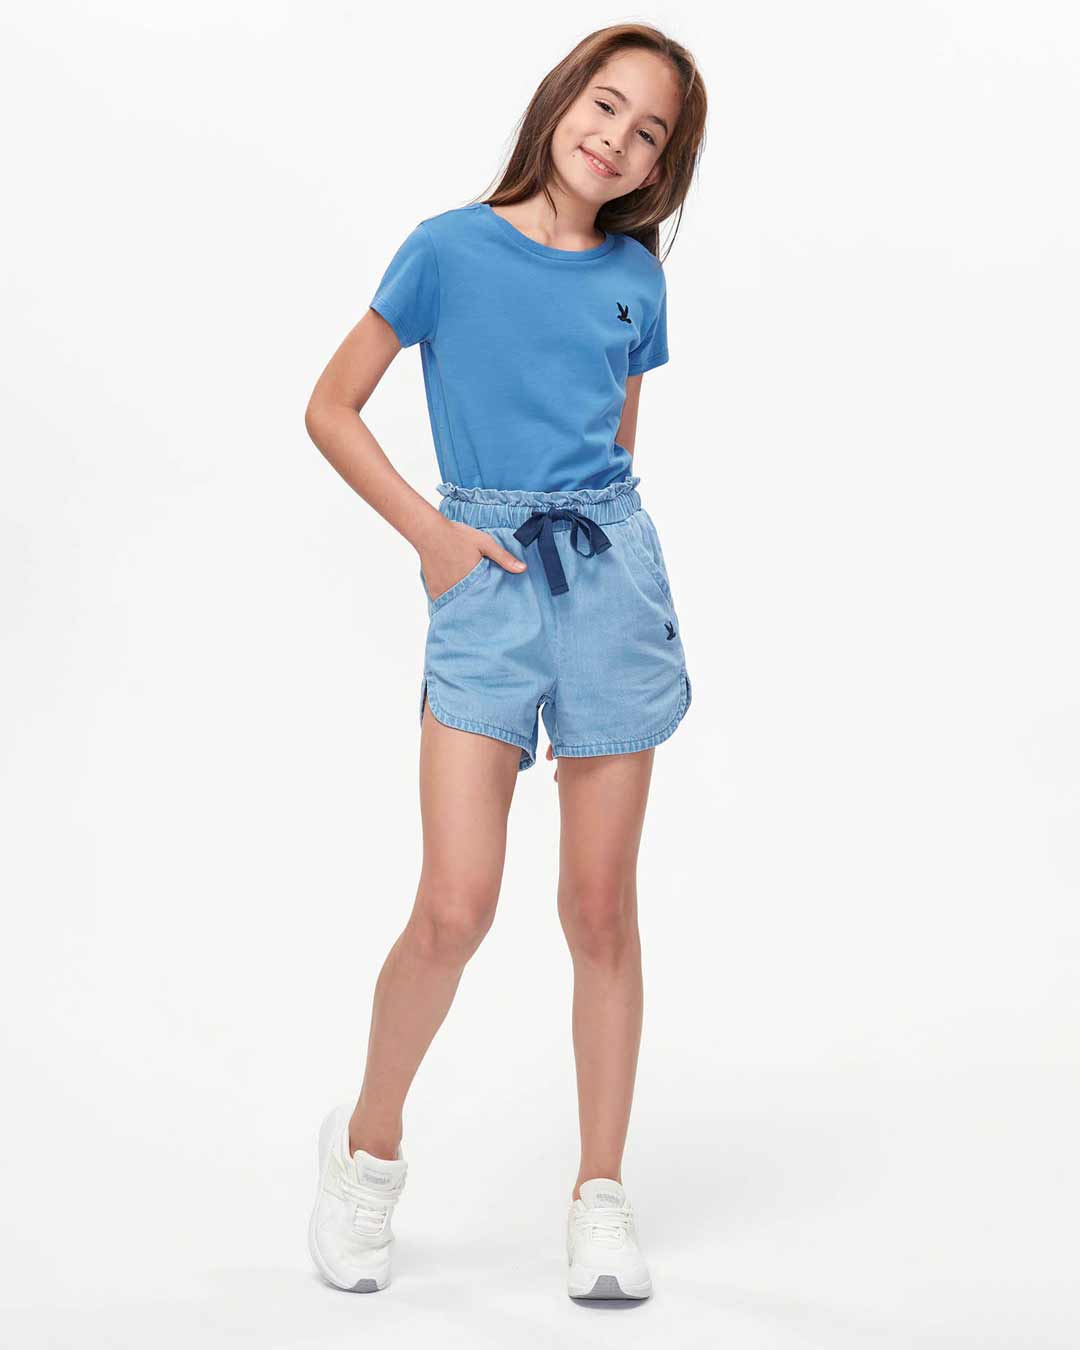 Nina - age 10 - Siam Models - Bangkok Modelling Agency